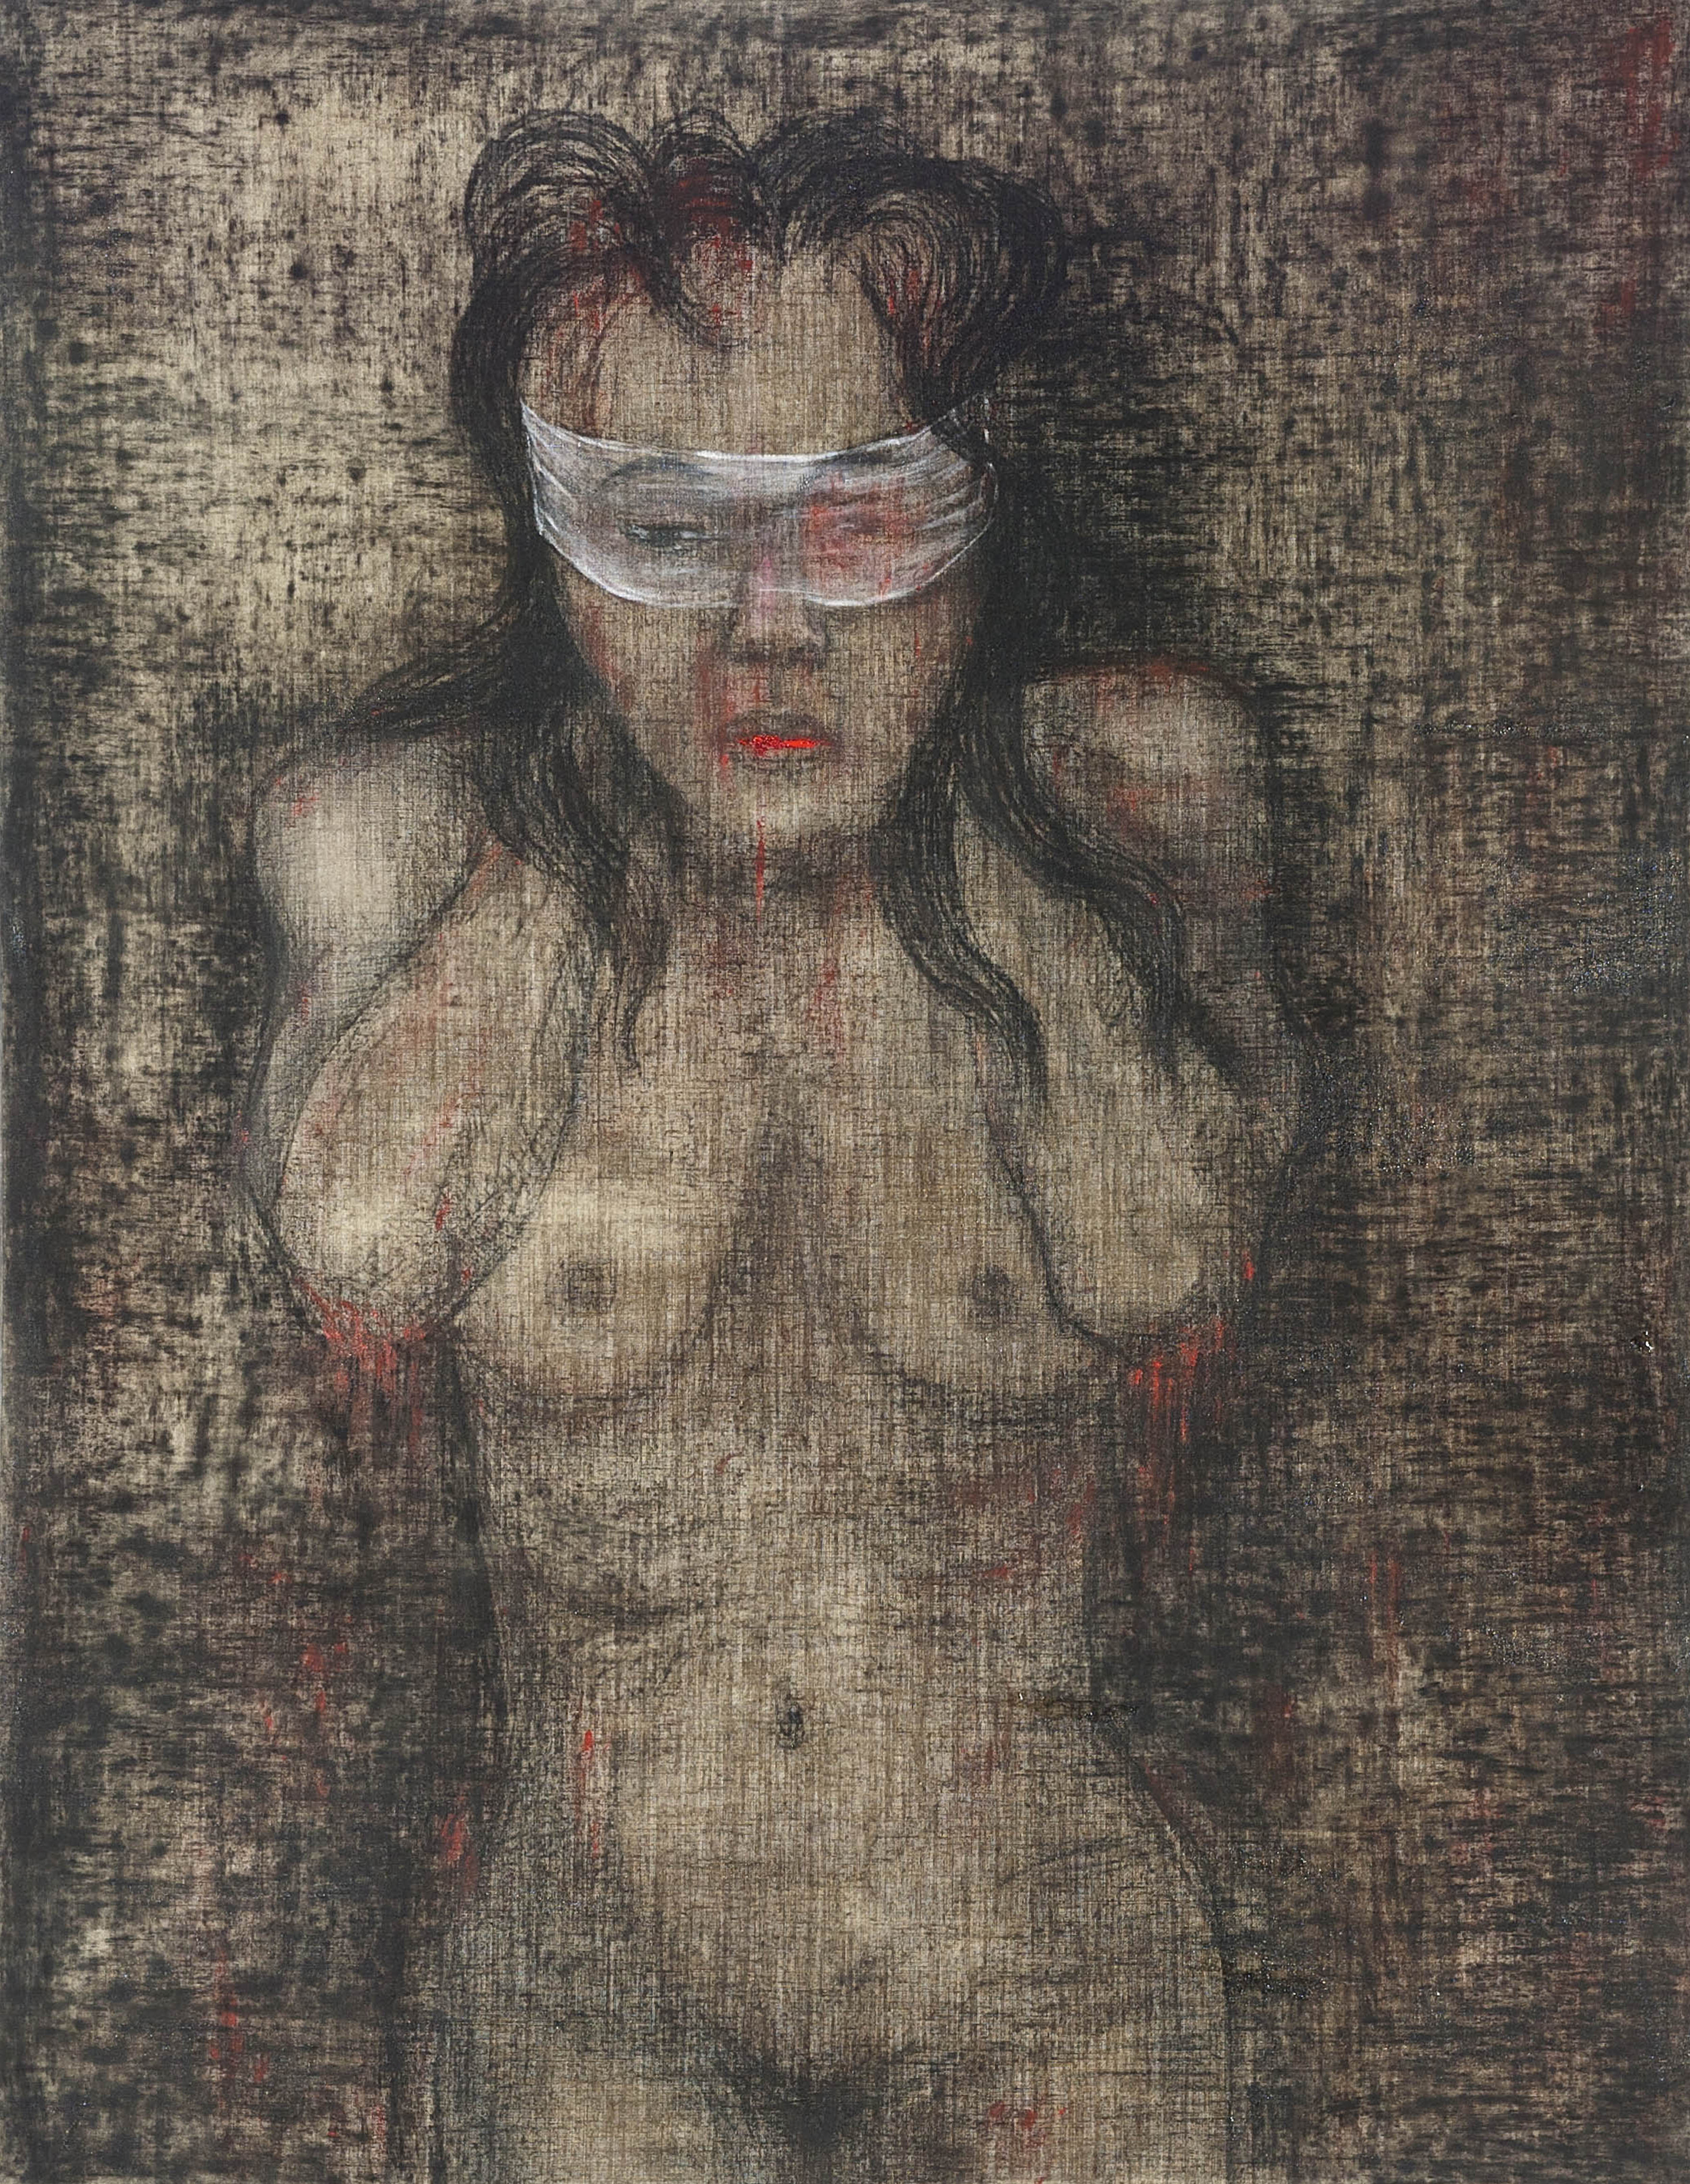 Ciduk, Siksa, Bunuh, Buang I (2018) Acrylic and charcoal on canvas; 162cm x 127cm